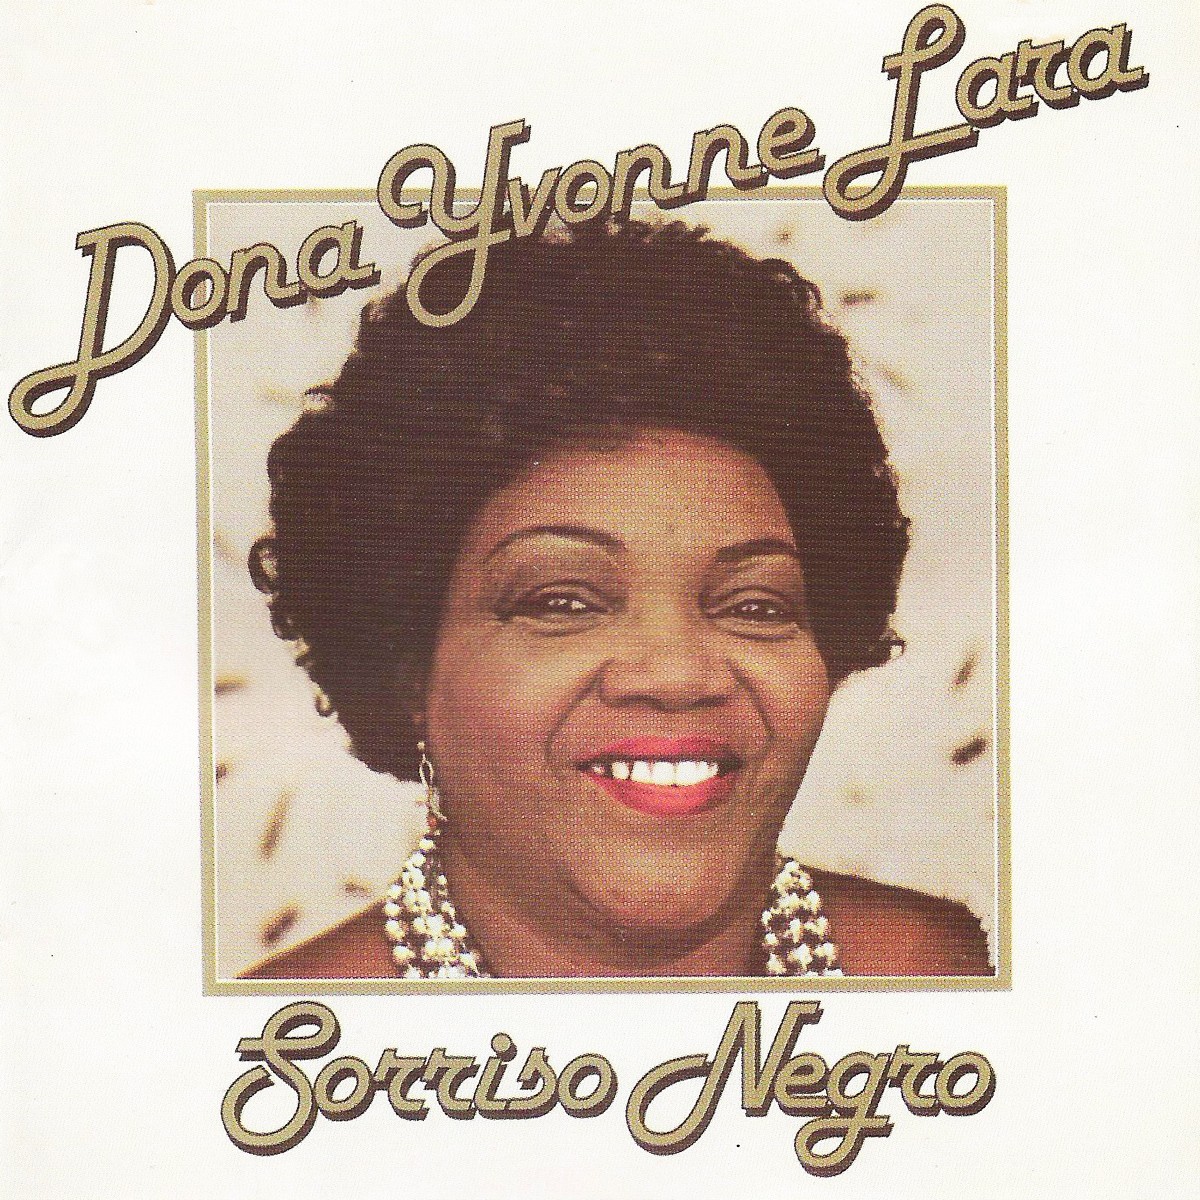 Disco lanzado por doña Ivone Lara en 1981, 'Sorriso Negro' es analizado desde un punto de vista político en la serie 'O Livro do Disco' | blog de mauro ferreira